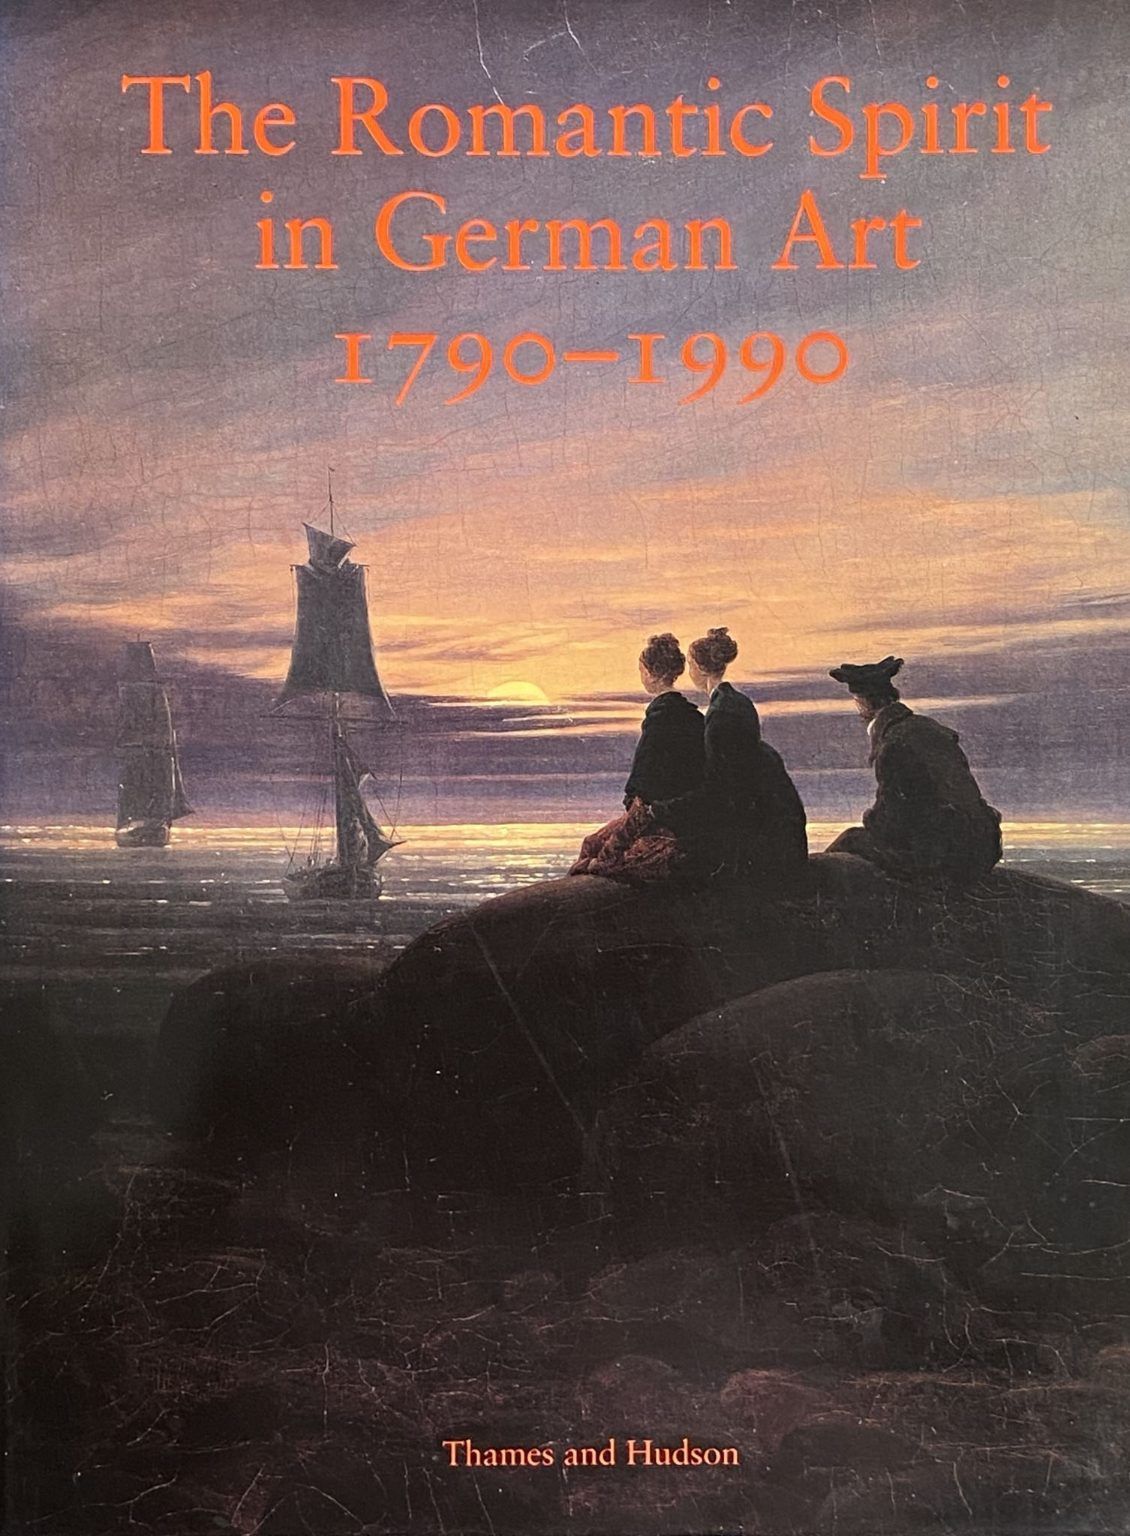 THE ROMANTIC SPIRIT IN GERMAN ART 1790-1990